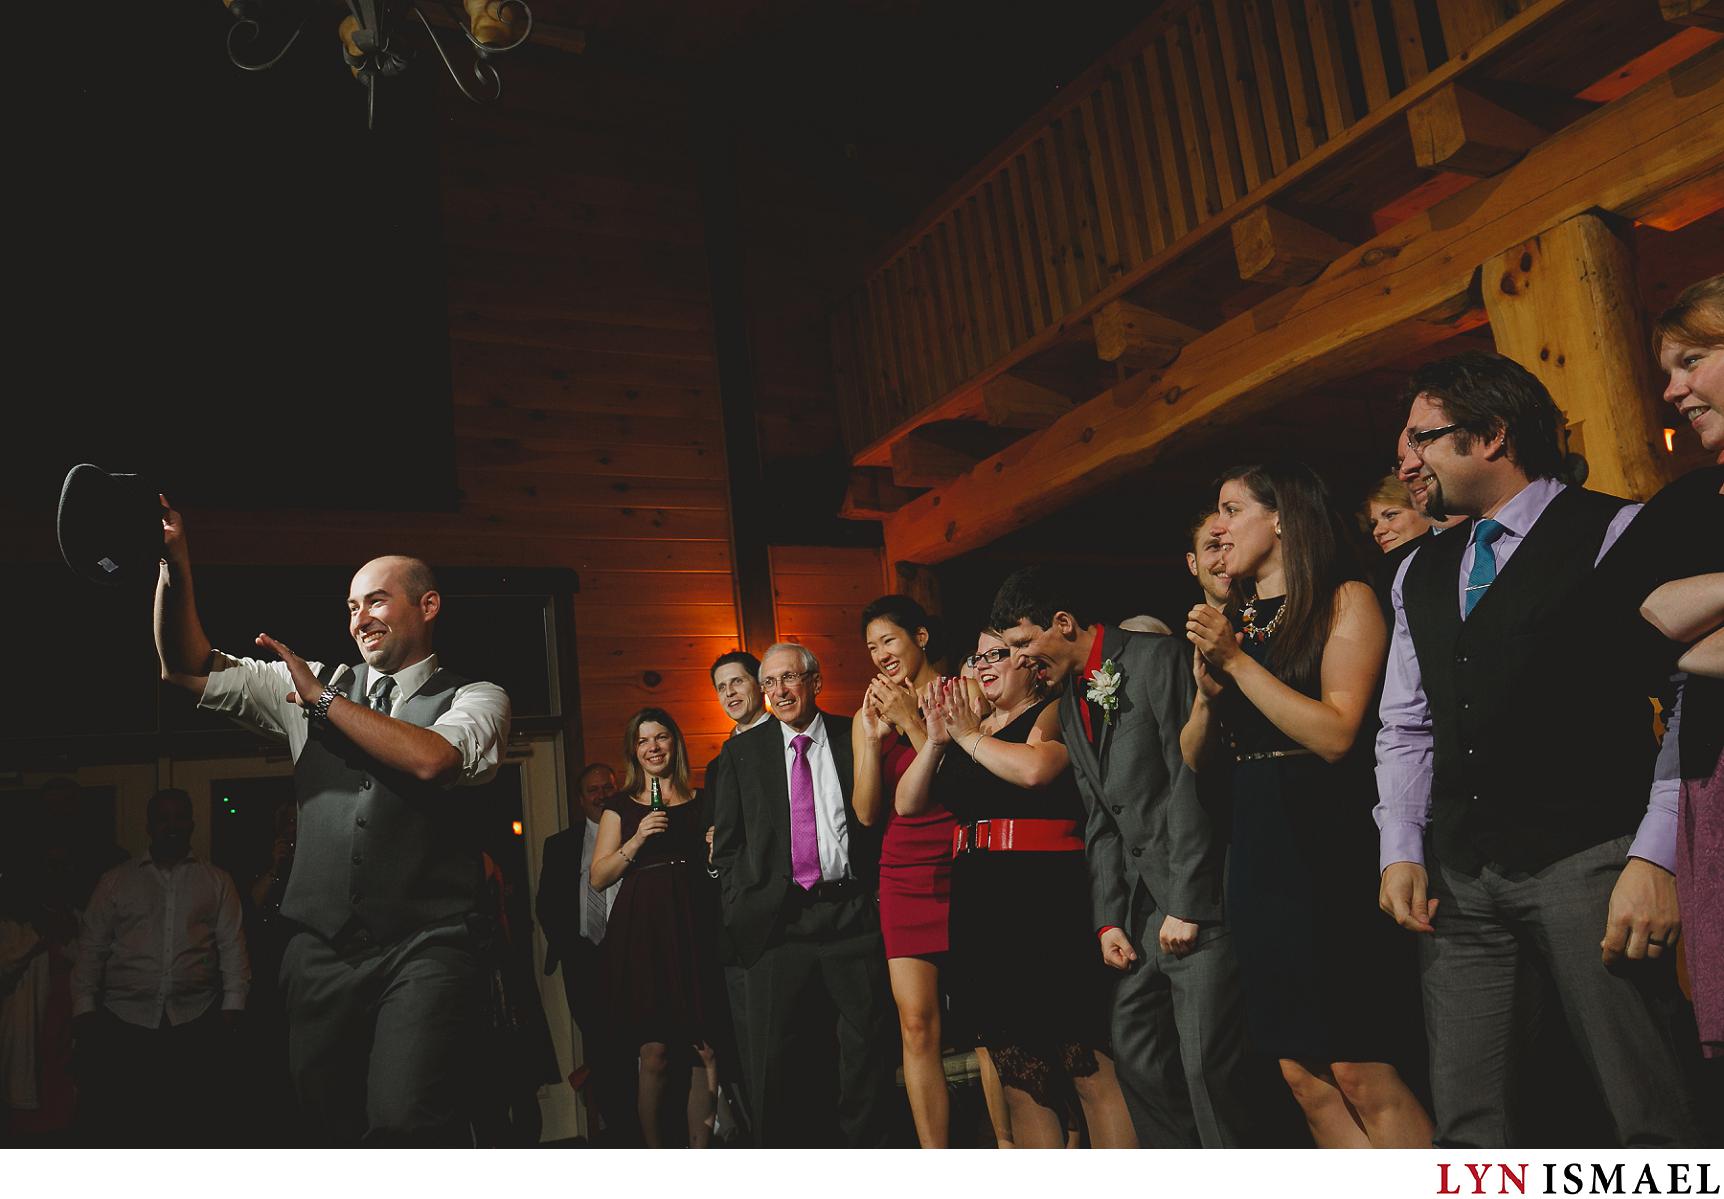 Holland Marsh wedding photographer captures a groom sancing to Michael Jackson's Thriller song.